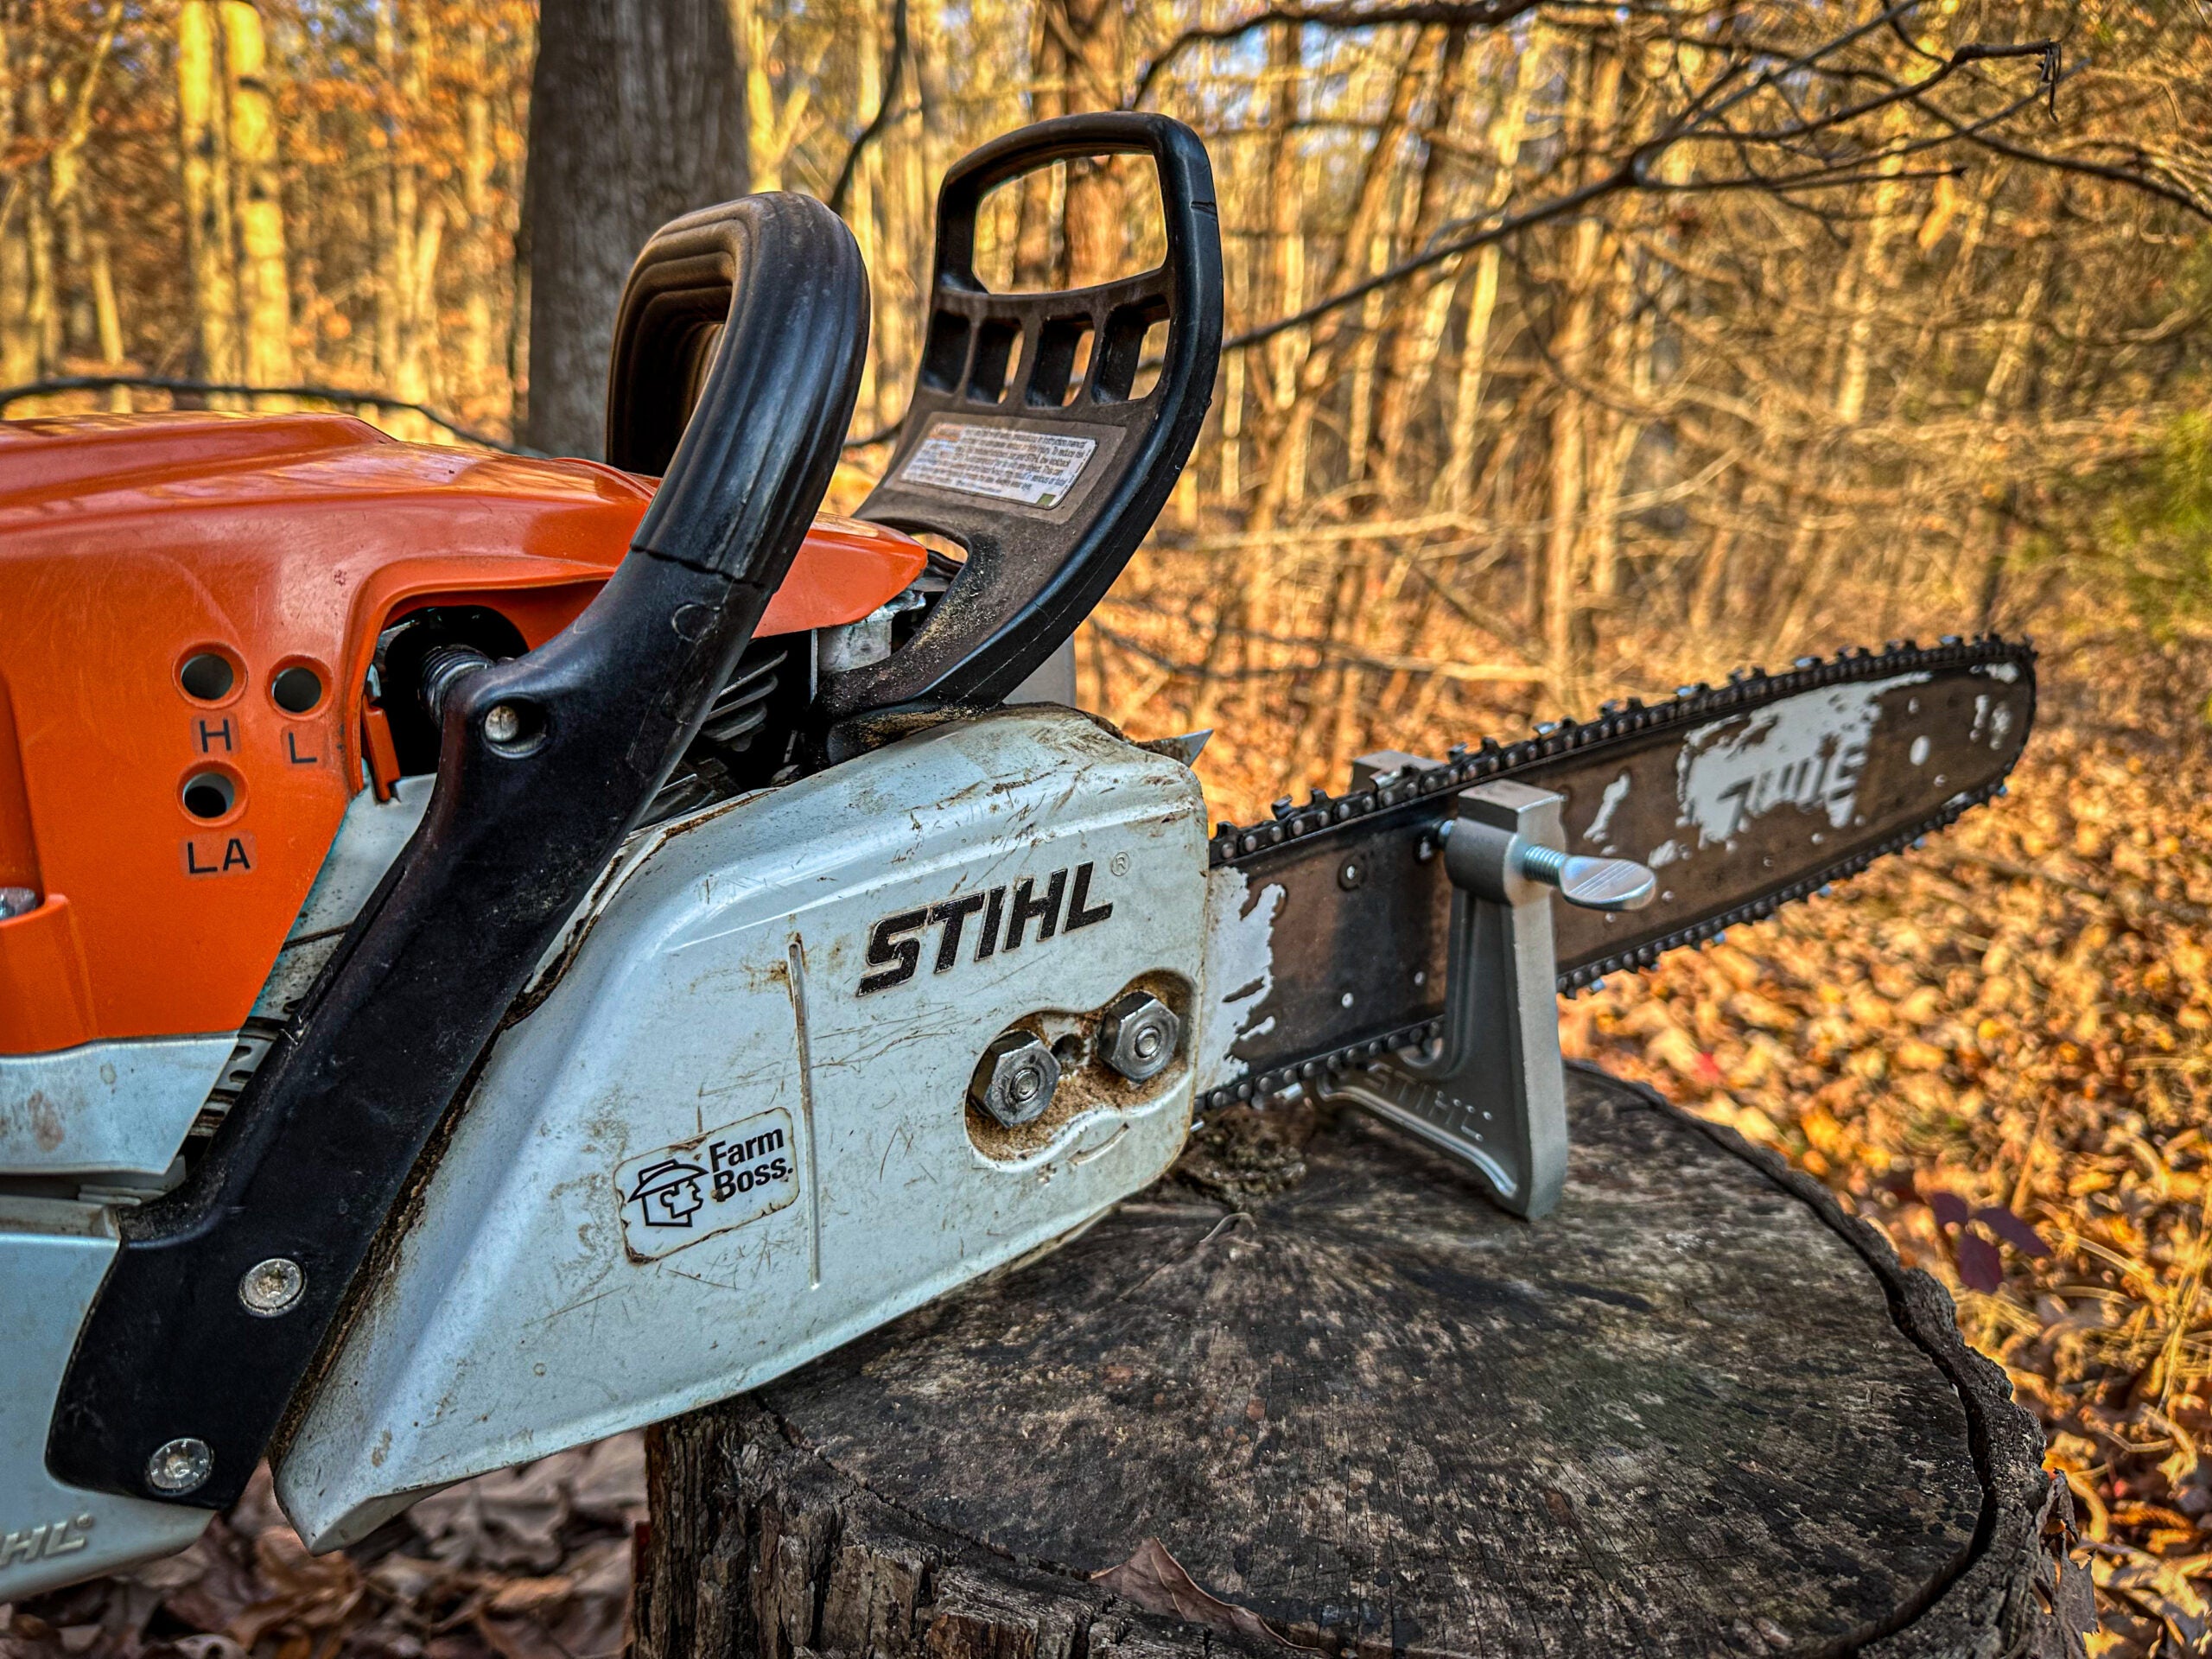 A Stihl chainsaw sits on a treestump